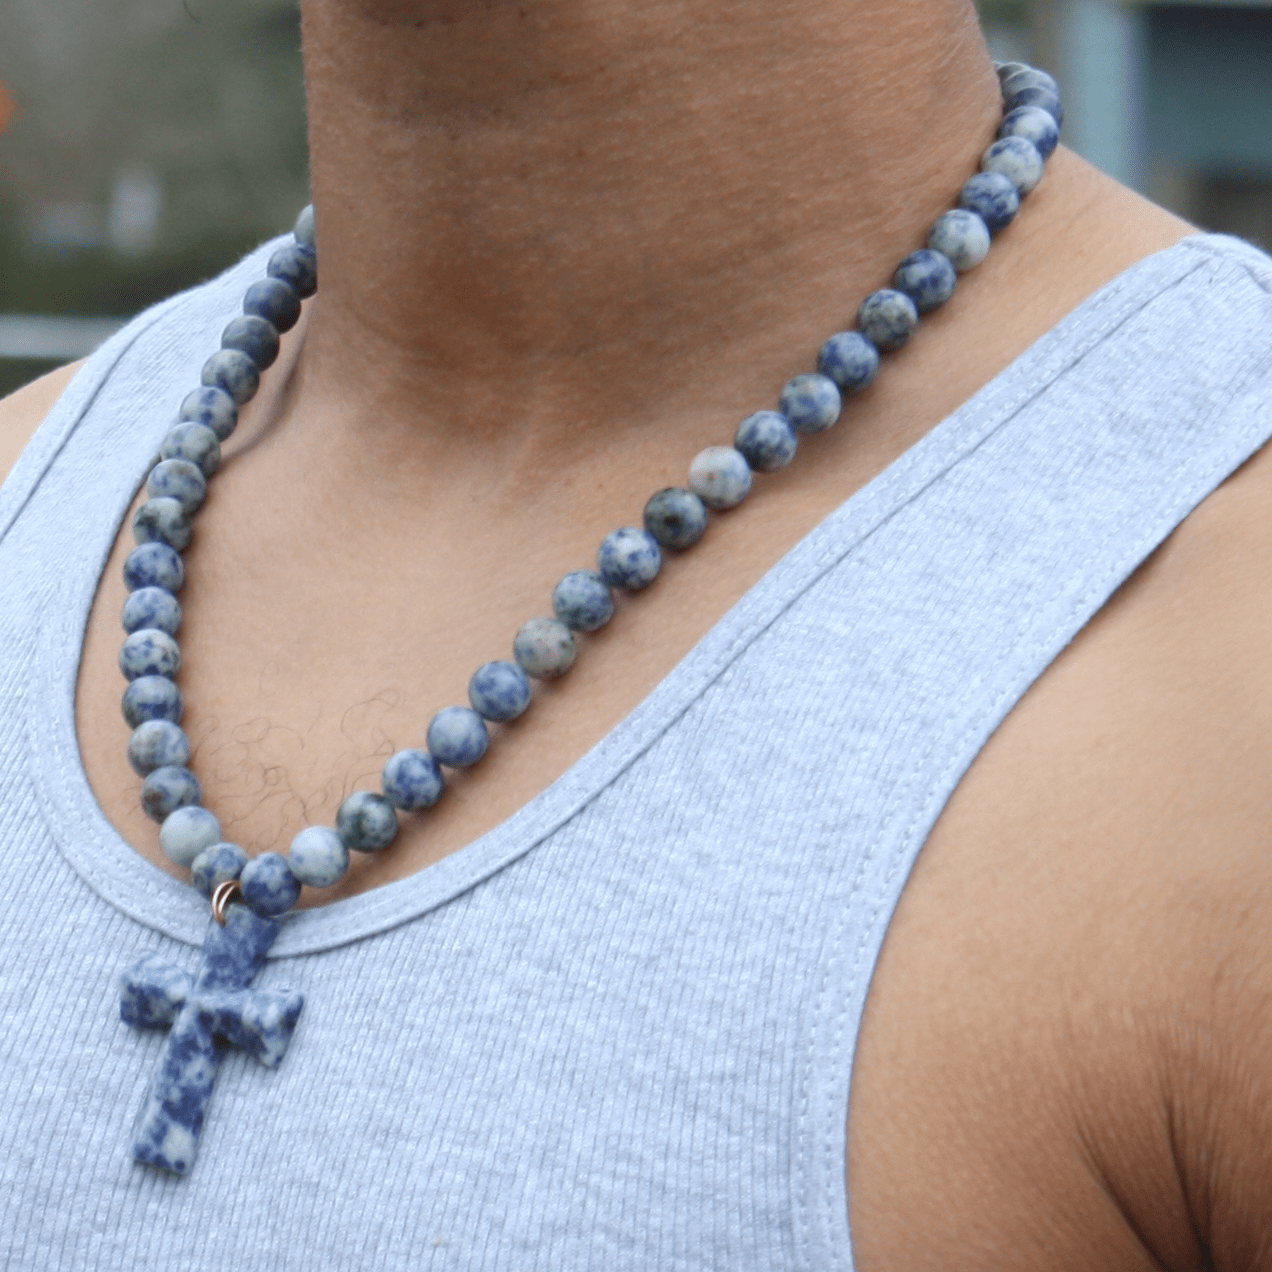 Genuine Sodalite Necklace with Sodalite Cross Pendant - Gift for Men/Woman - Spiritual Accessories - Religious Symbol